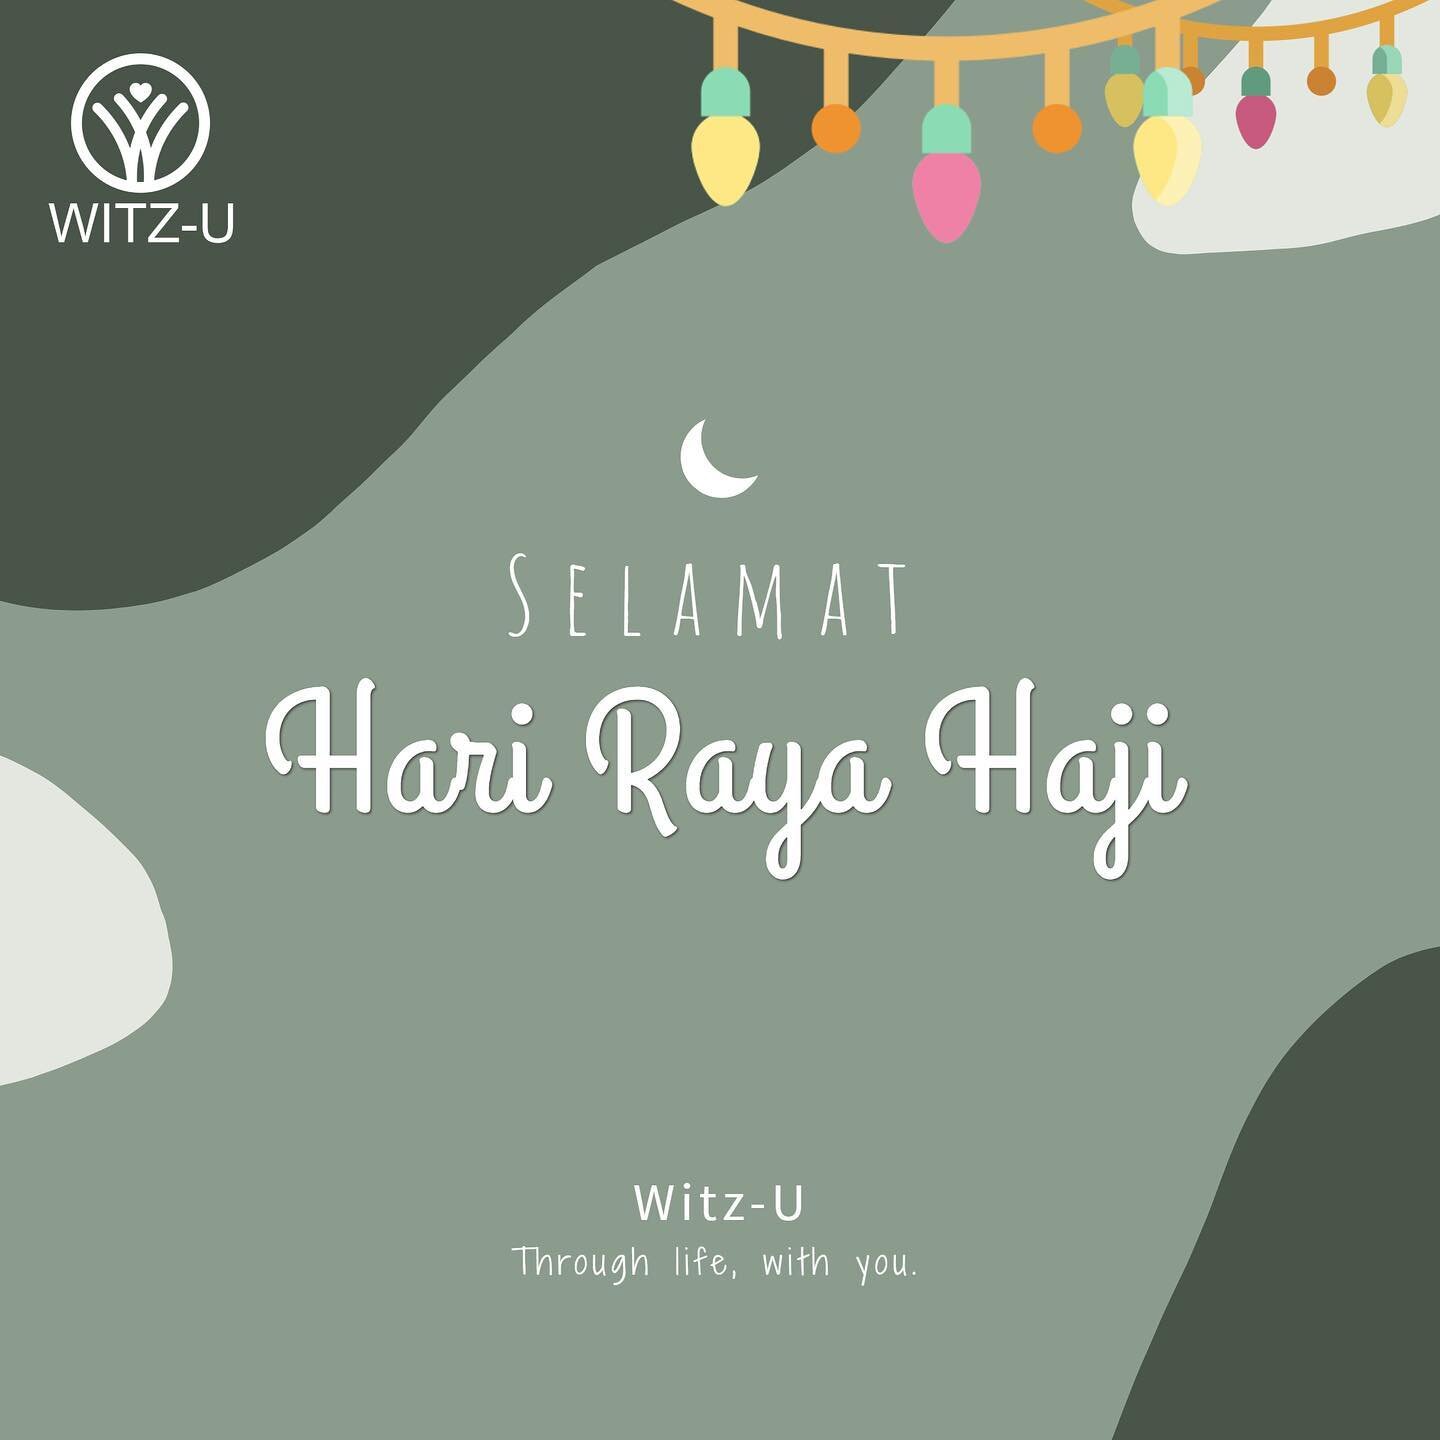 Witz-U wishes all Muslim friends out there Selamat Hari Raya Haji! Have a joyous celebration with your loved ones and stay safe always!
.
.
#witzu #harirayahaji #harirayahaji2021 #sg